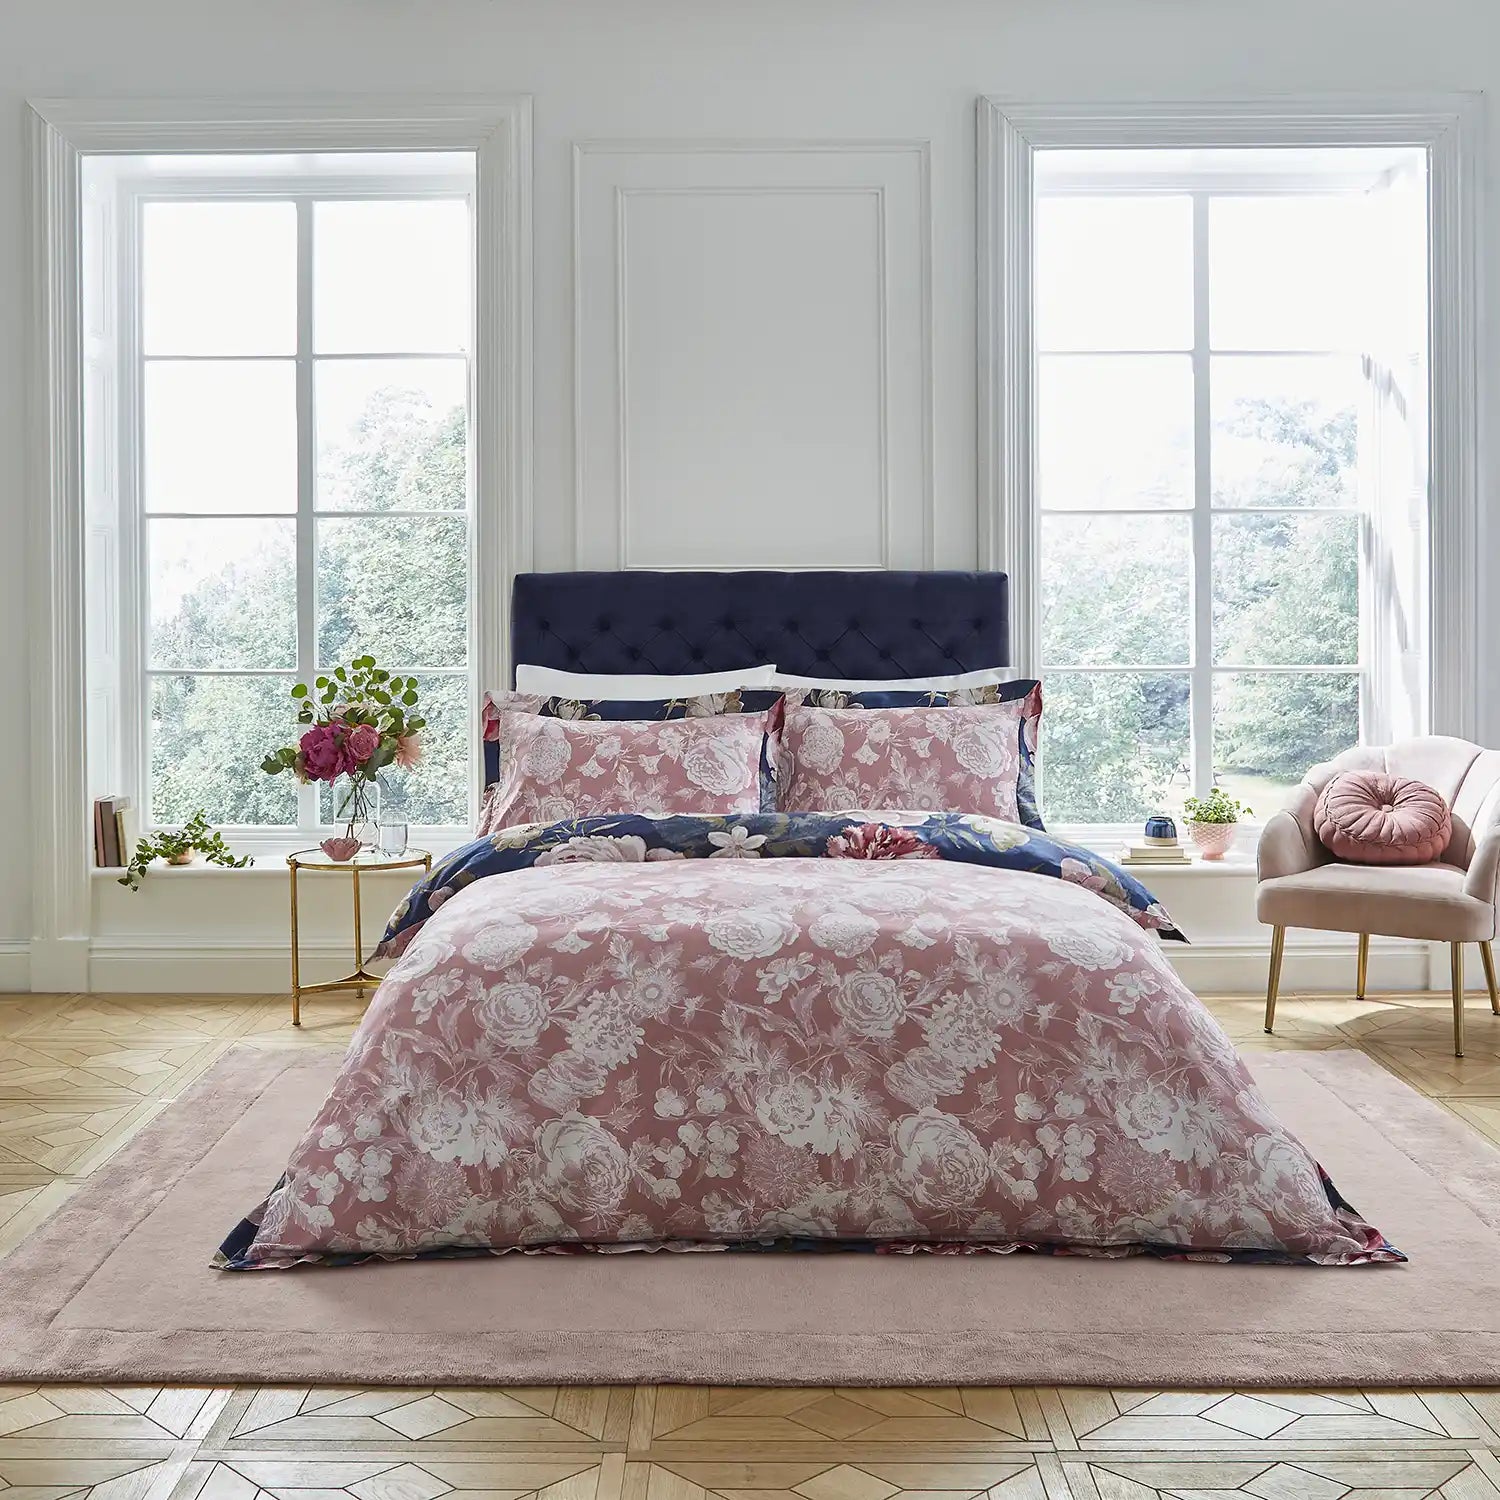 Dorma Constance Floral Bedspread - Navy floral 2 Shaws Department Stores